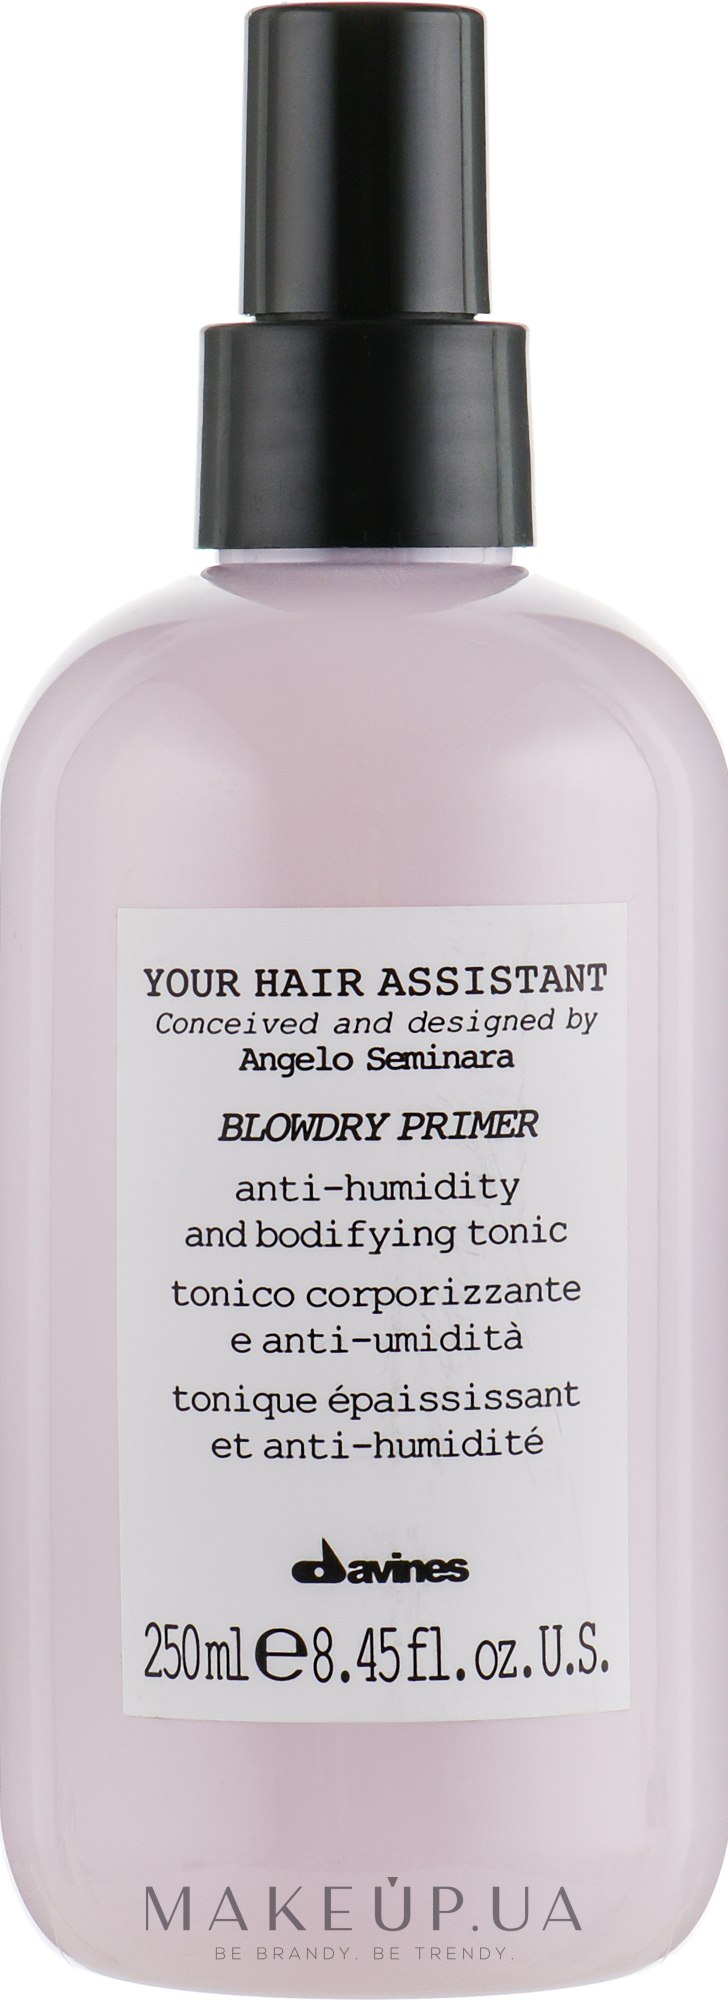 Спрей-праймер для укладки волос - Davines Your Hair Assistant Blowdry Primer — фото 250ml